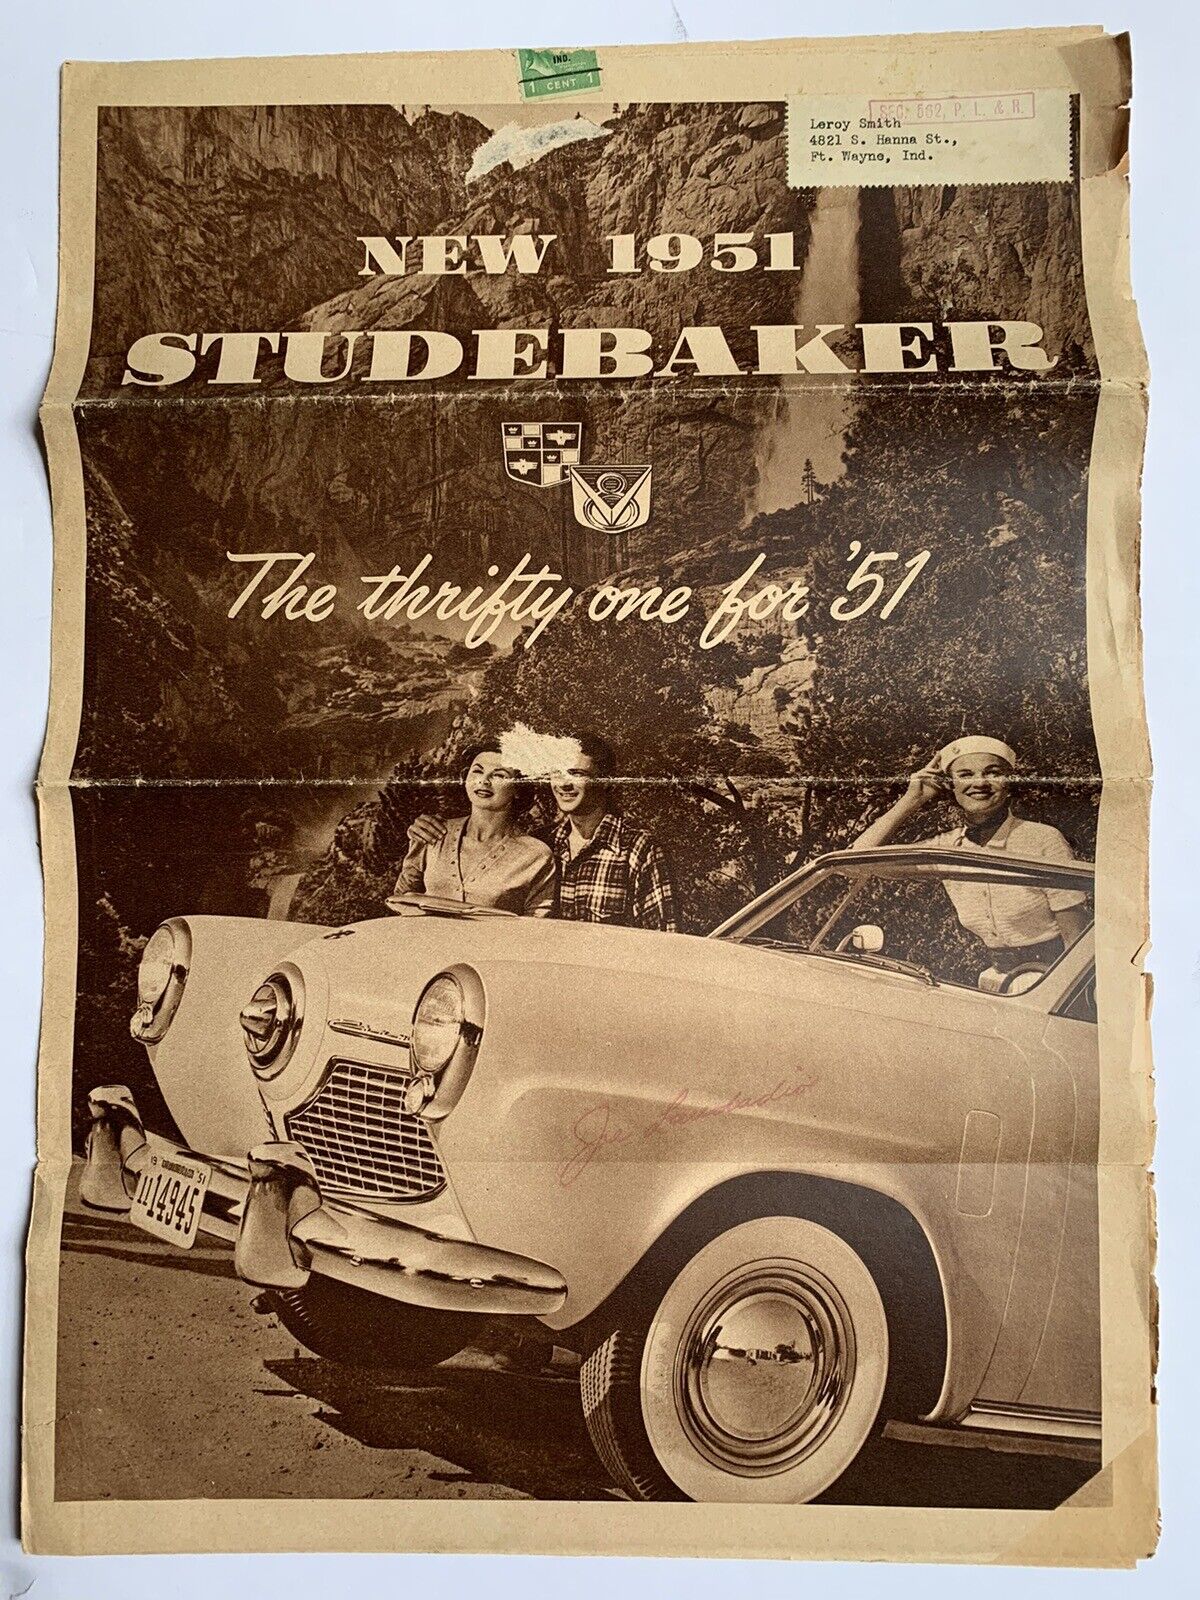 Print Ad 1951 Studebaker 8 Page Newsprint Sepia Tone 15